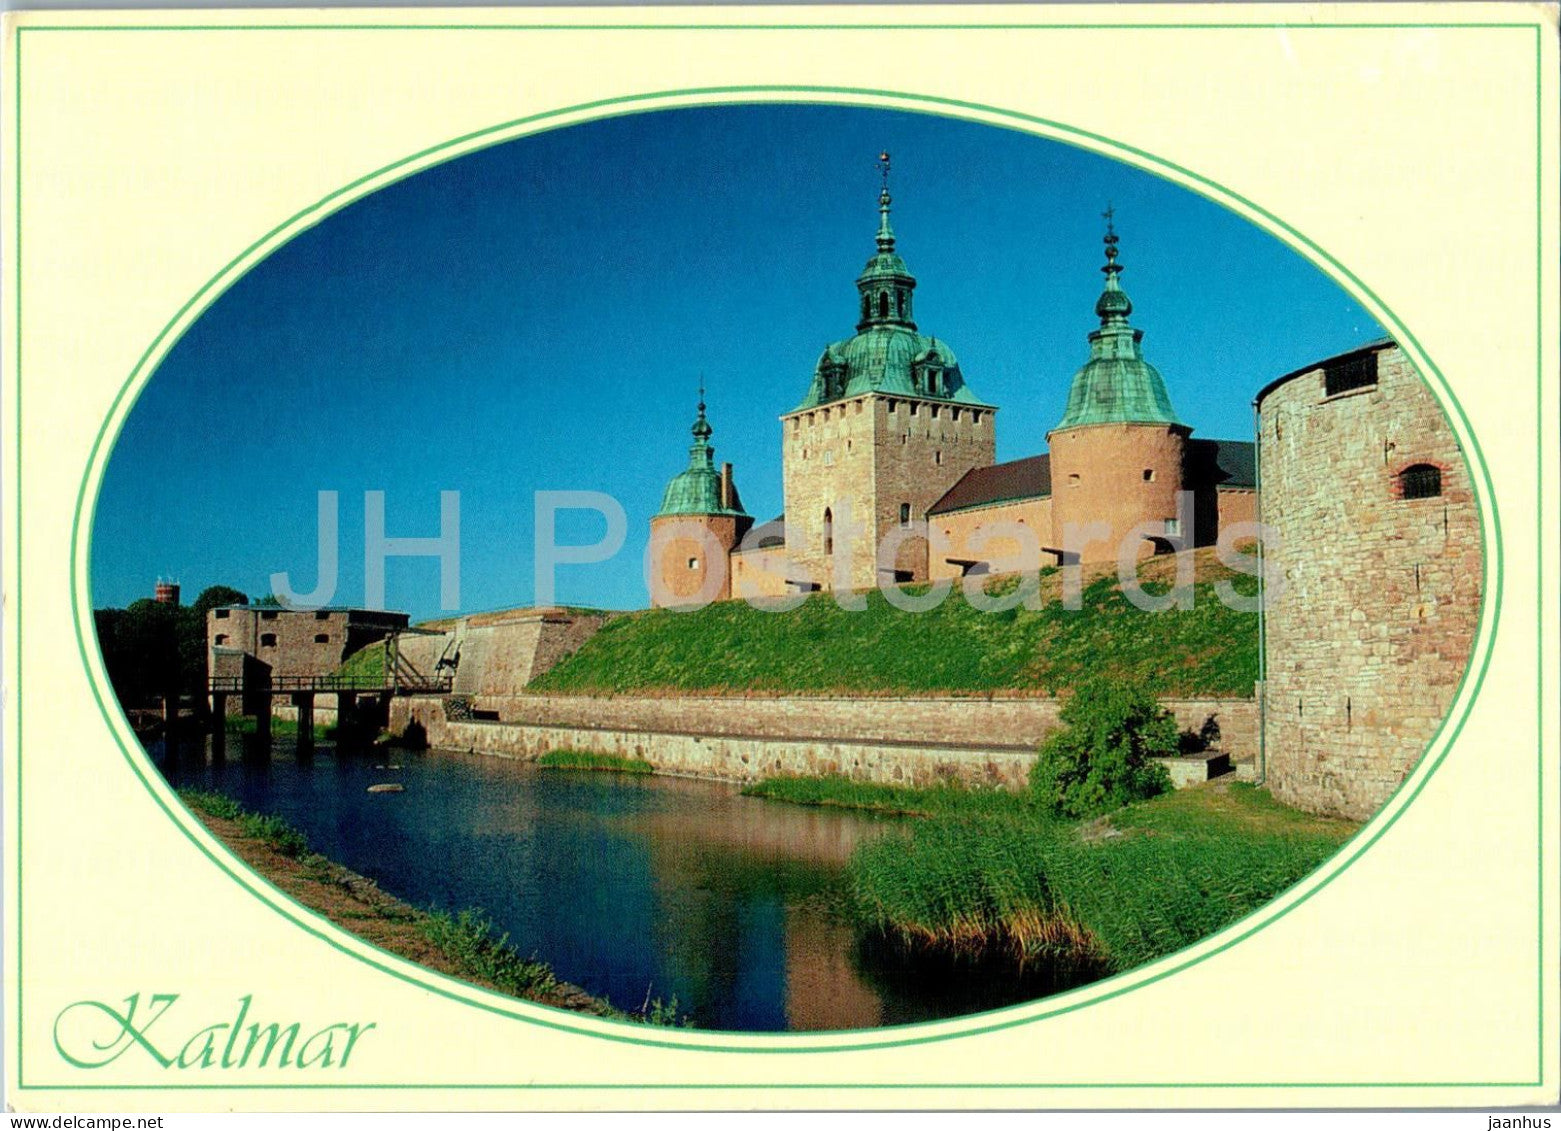 Kalmar Slott - castle - boat - 202 - 2005 - Sweden - unused - JH Postcards